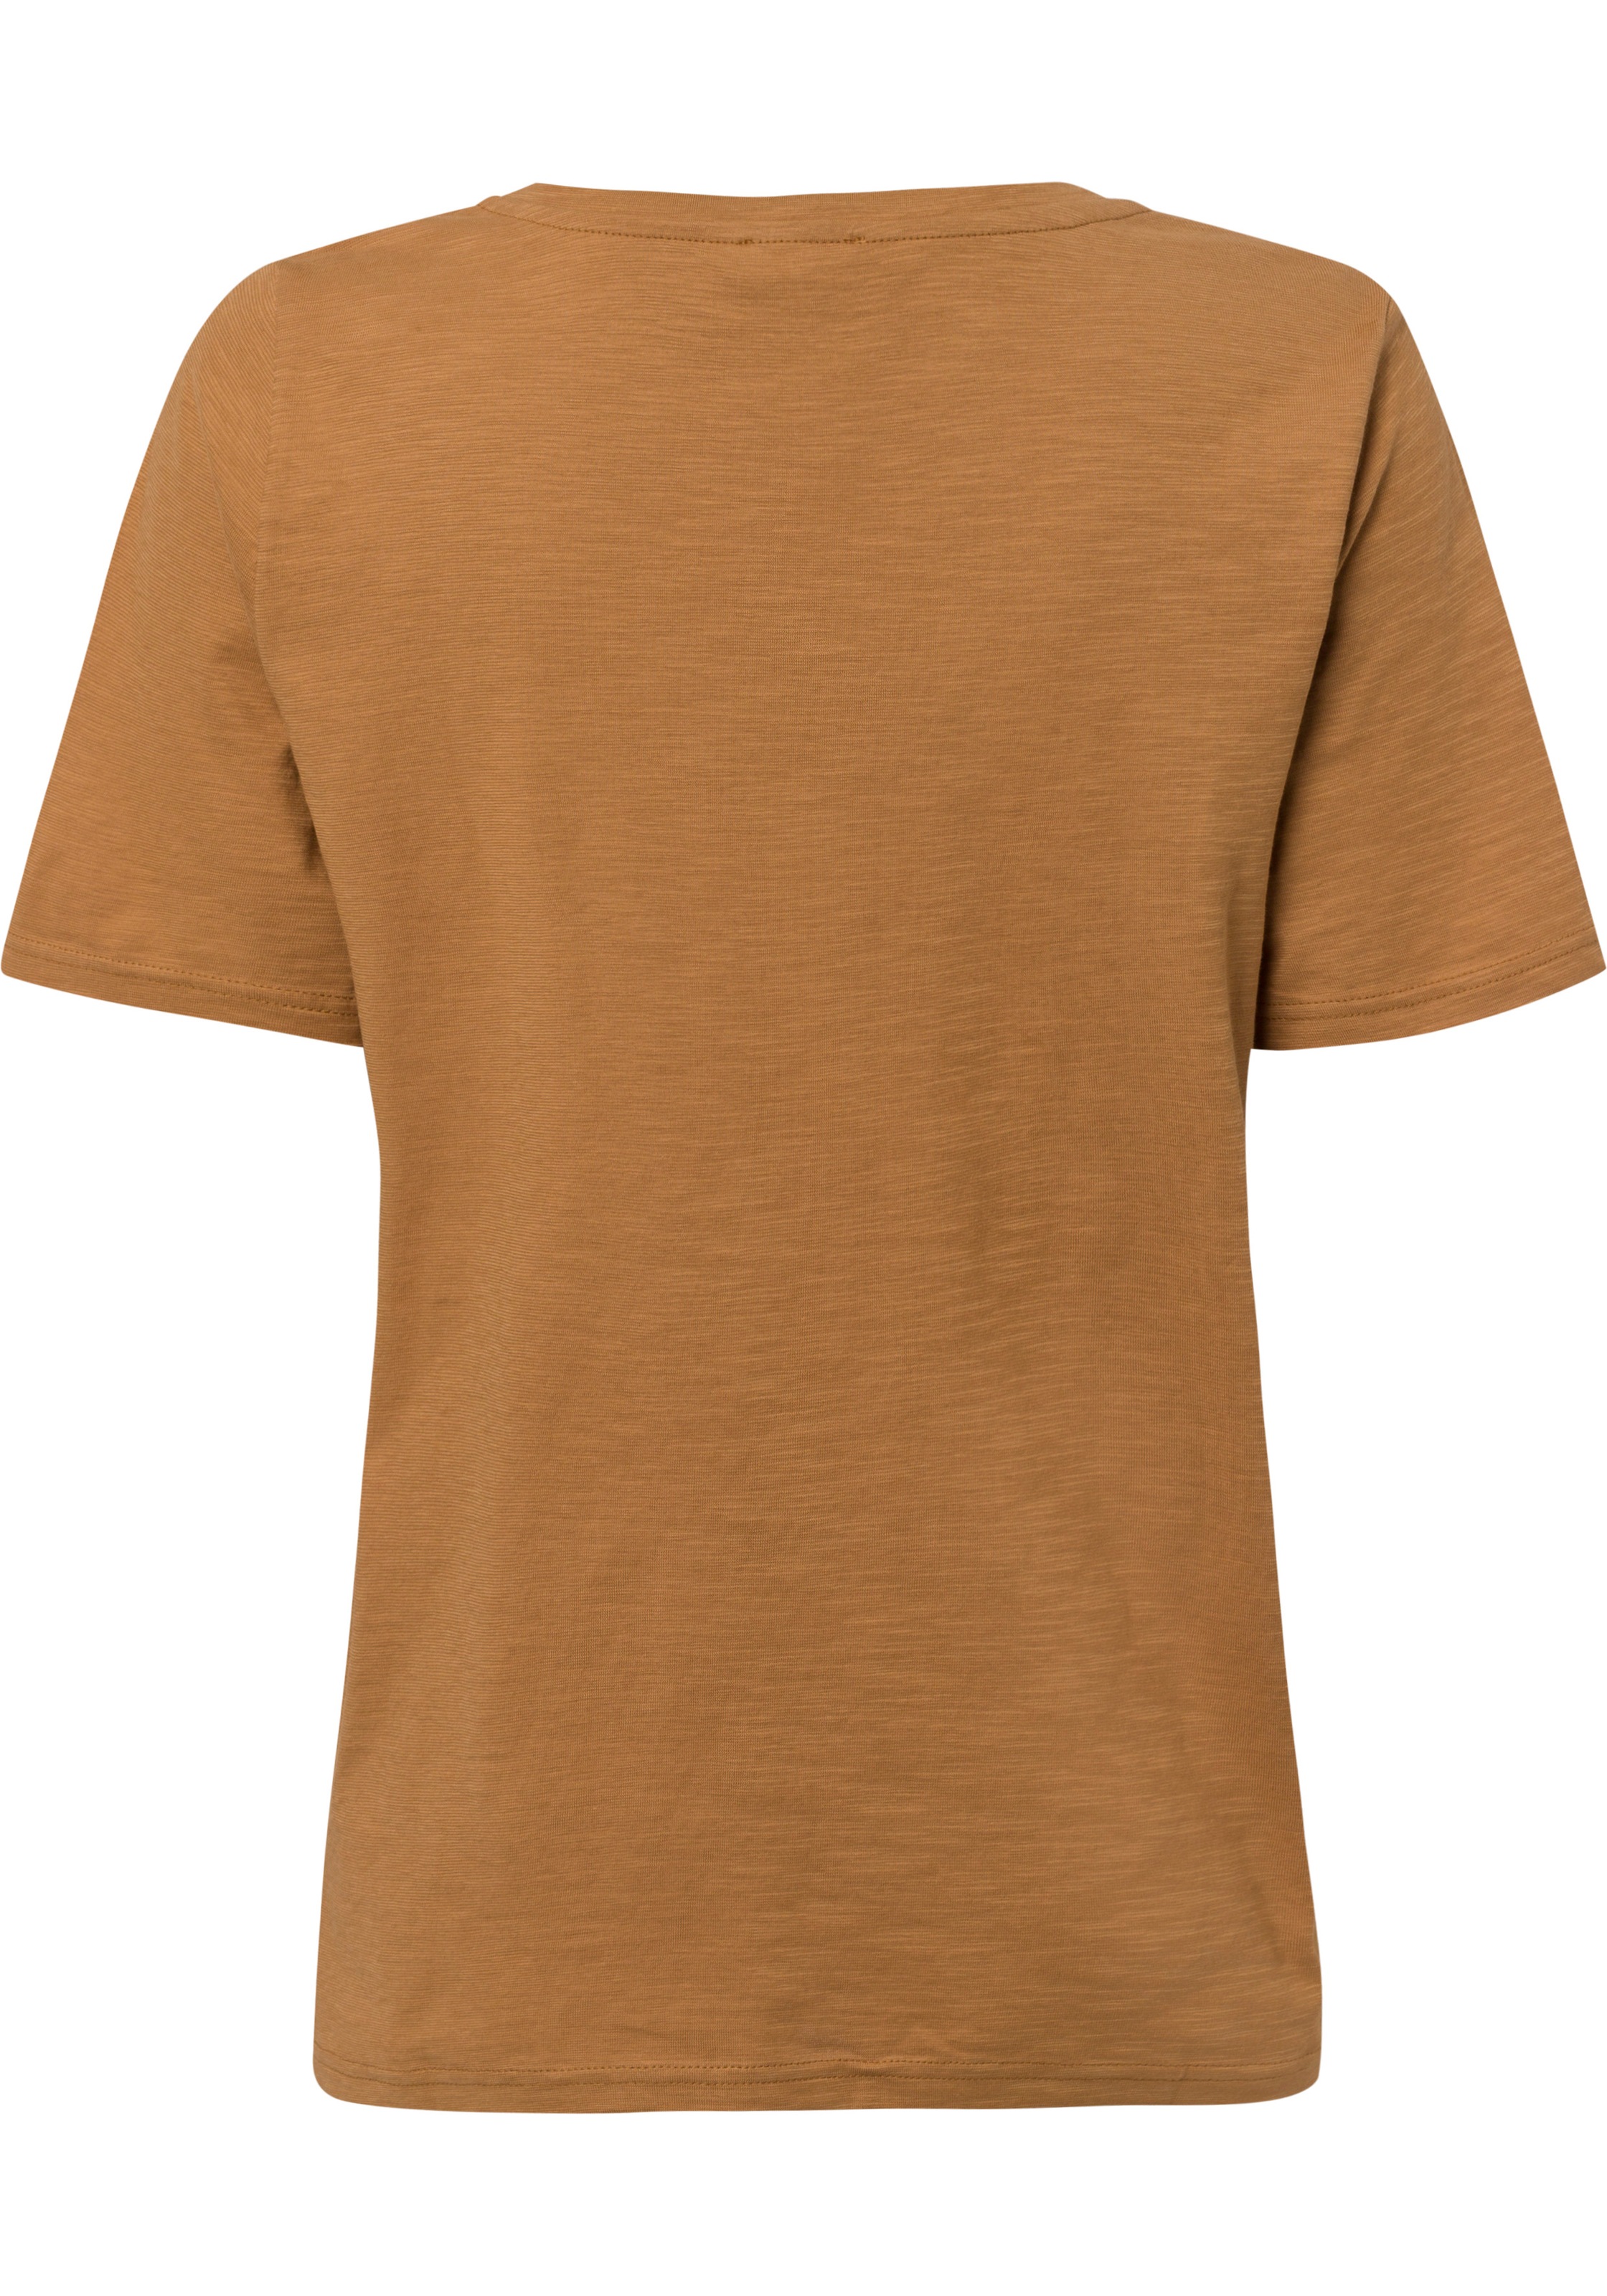 United Colors of Benetton T-Shirt, aus Flammgarnjersey kaufen bei OTTO